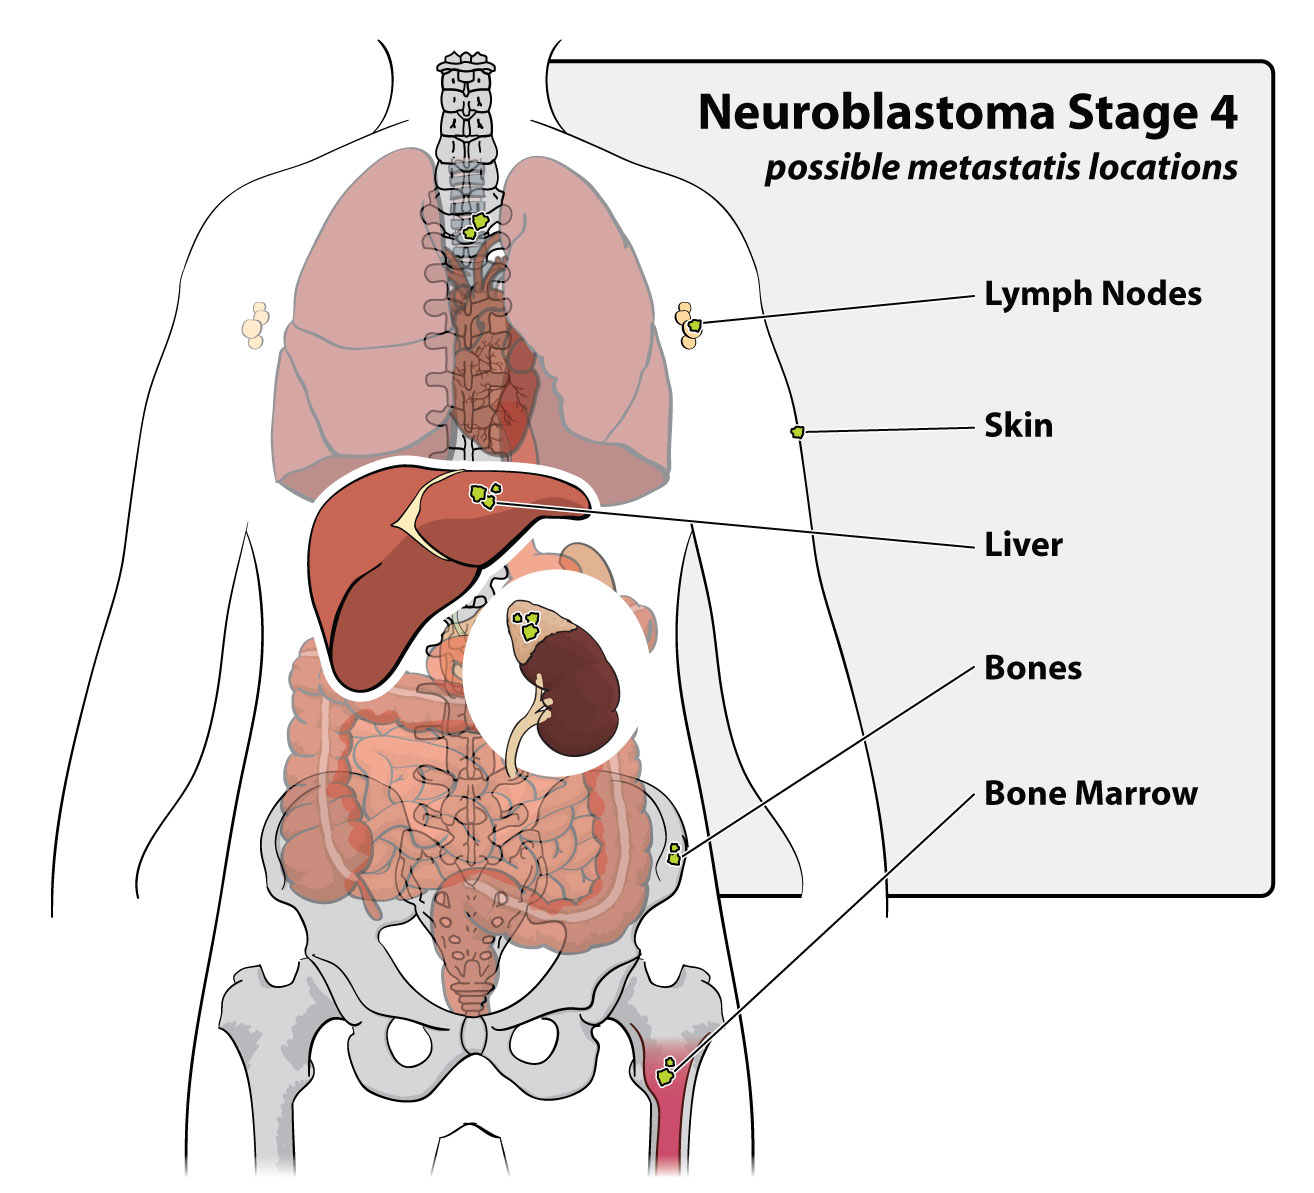 Neuroblastoma Stage 4 possible metastasis locations